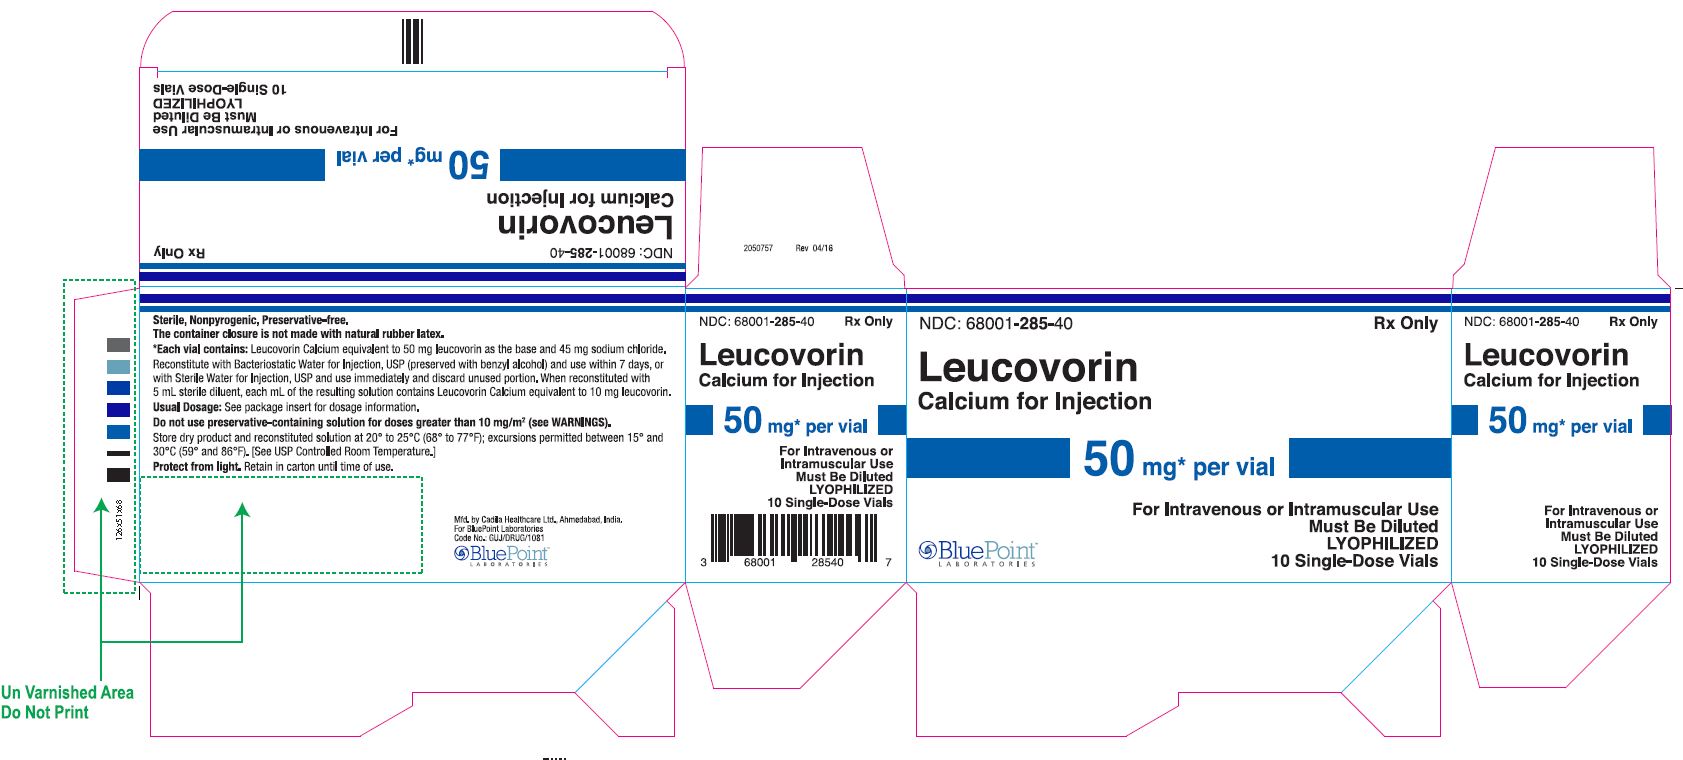 Leucovorin Calcium for Injection 50mg carton